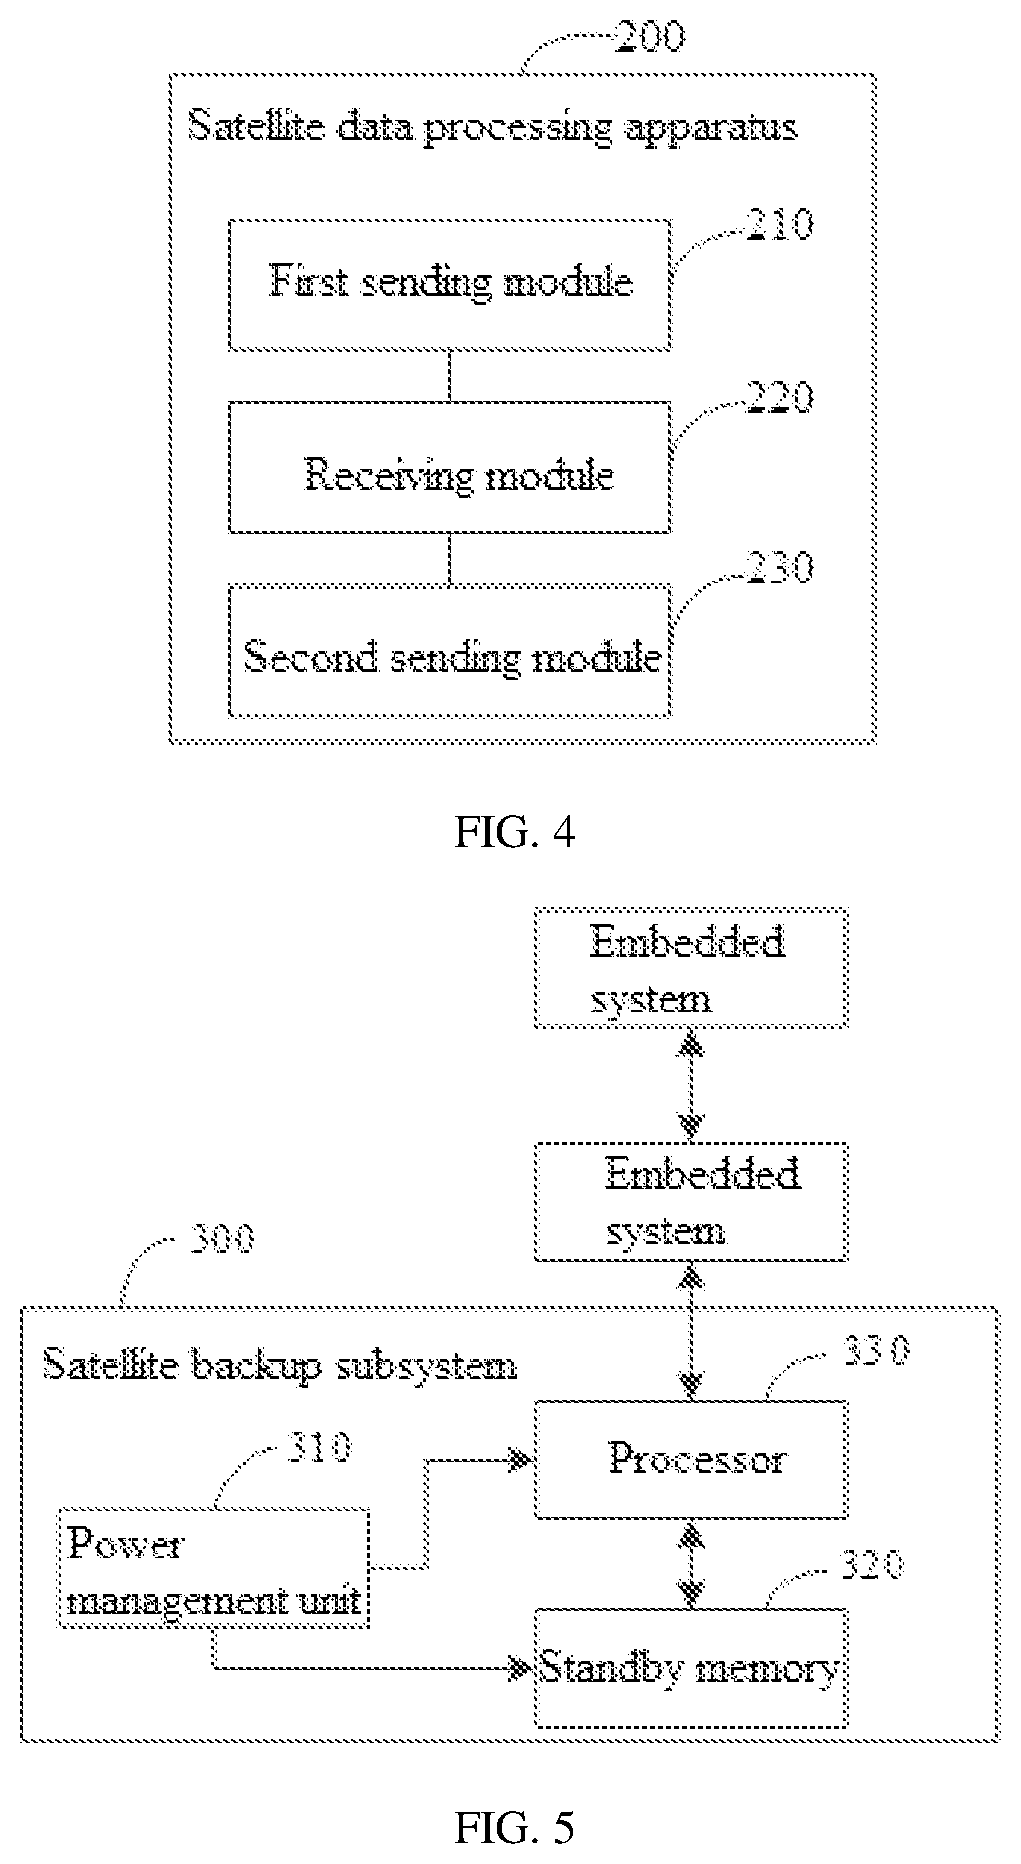 Satellite data processing method, apparatus, and satellite backup subsystem